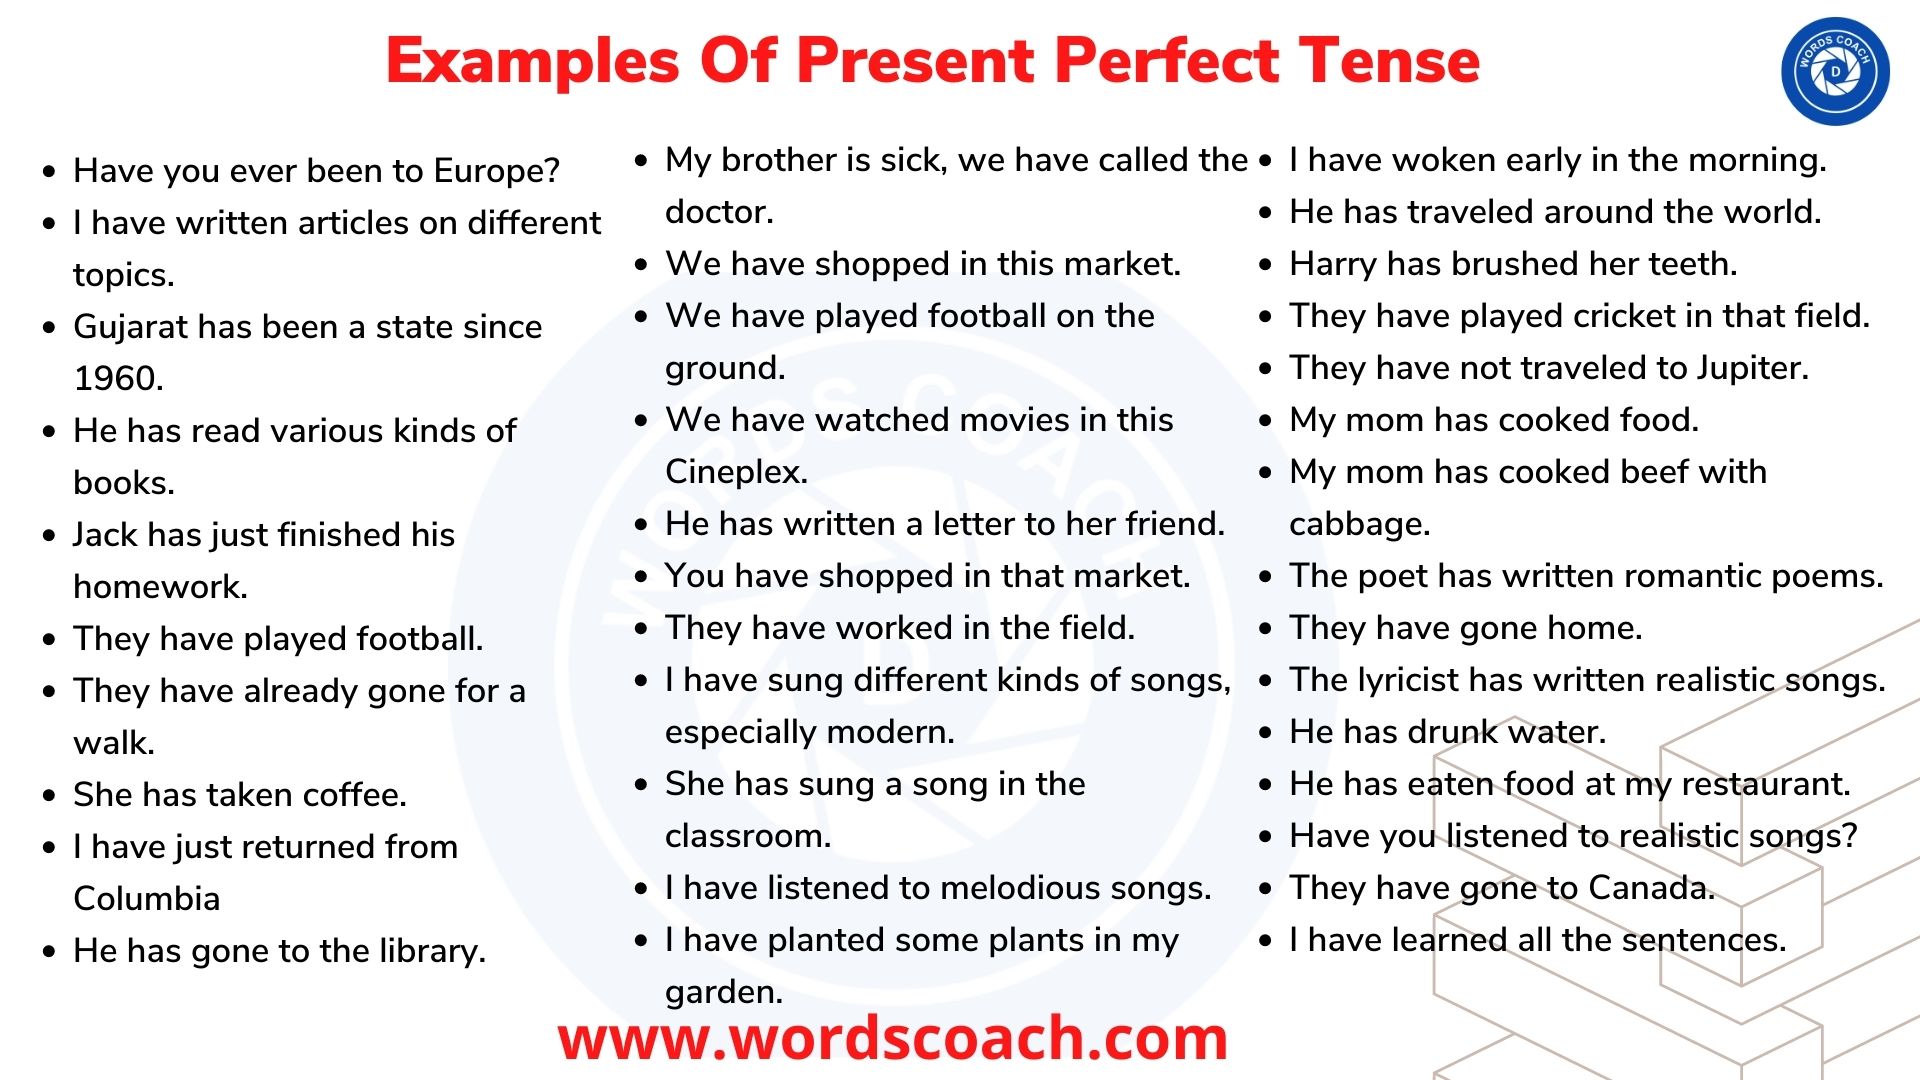 Examples Of Present Perfect Tense - wordscoach.com